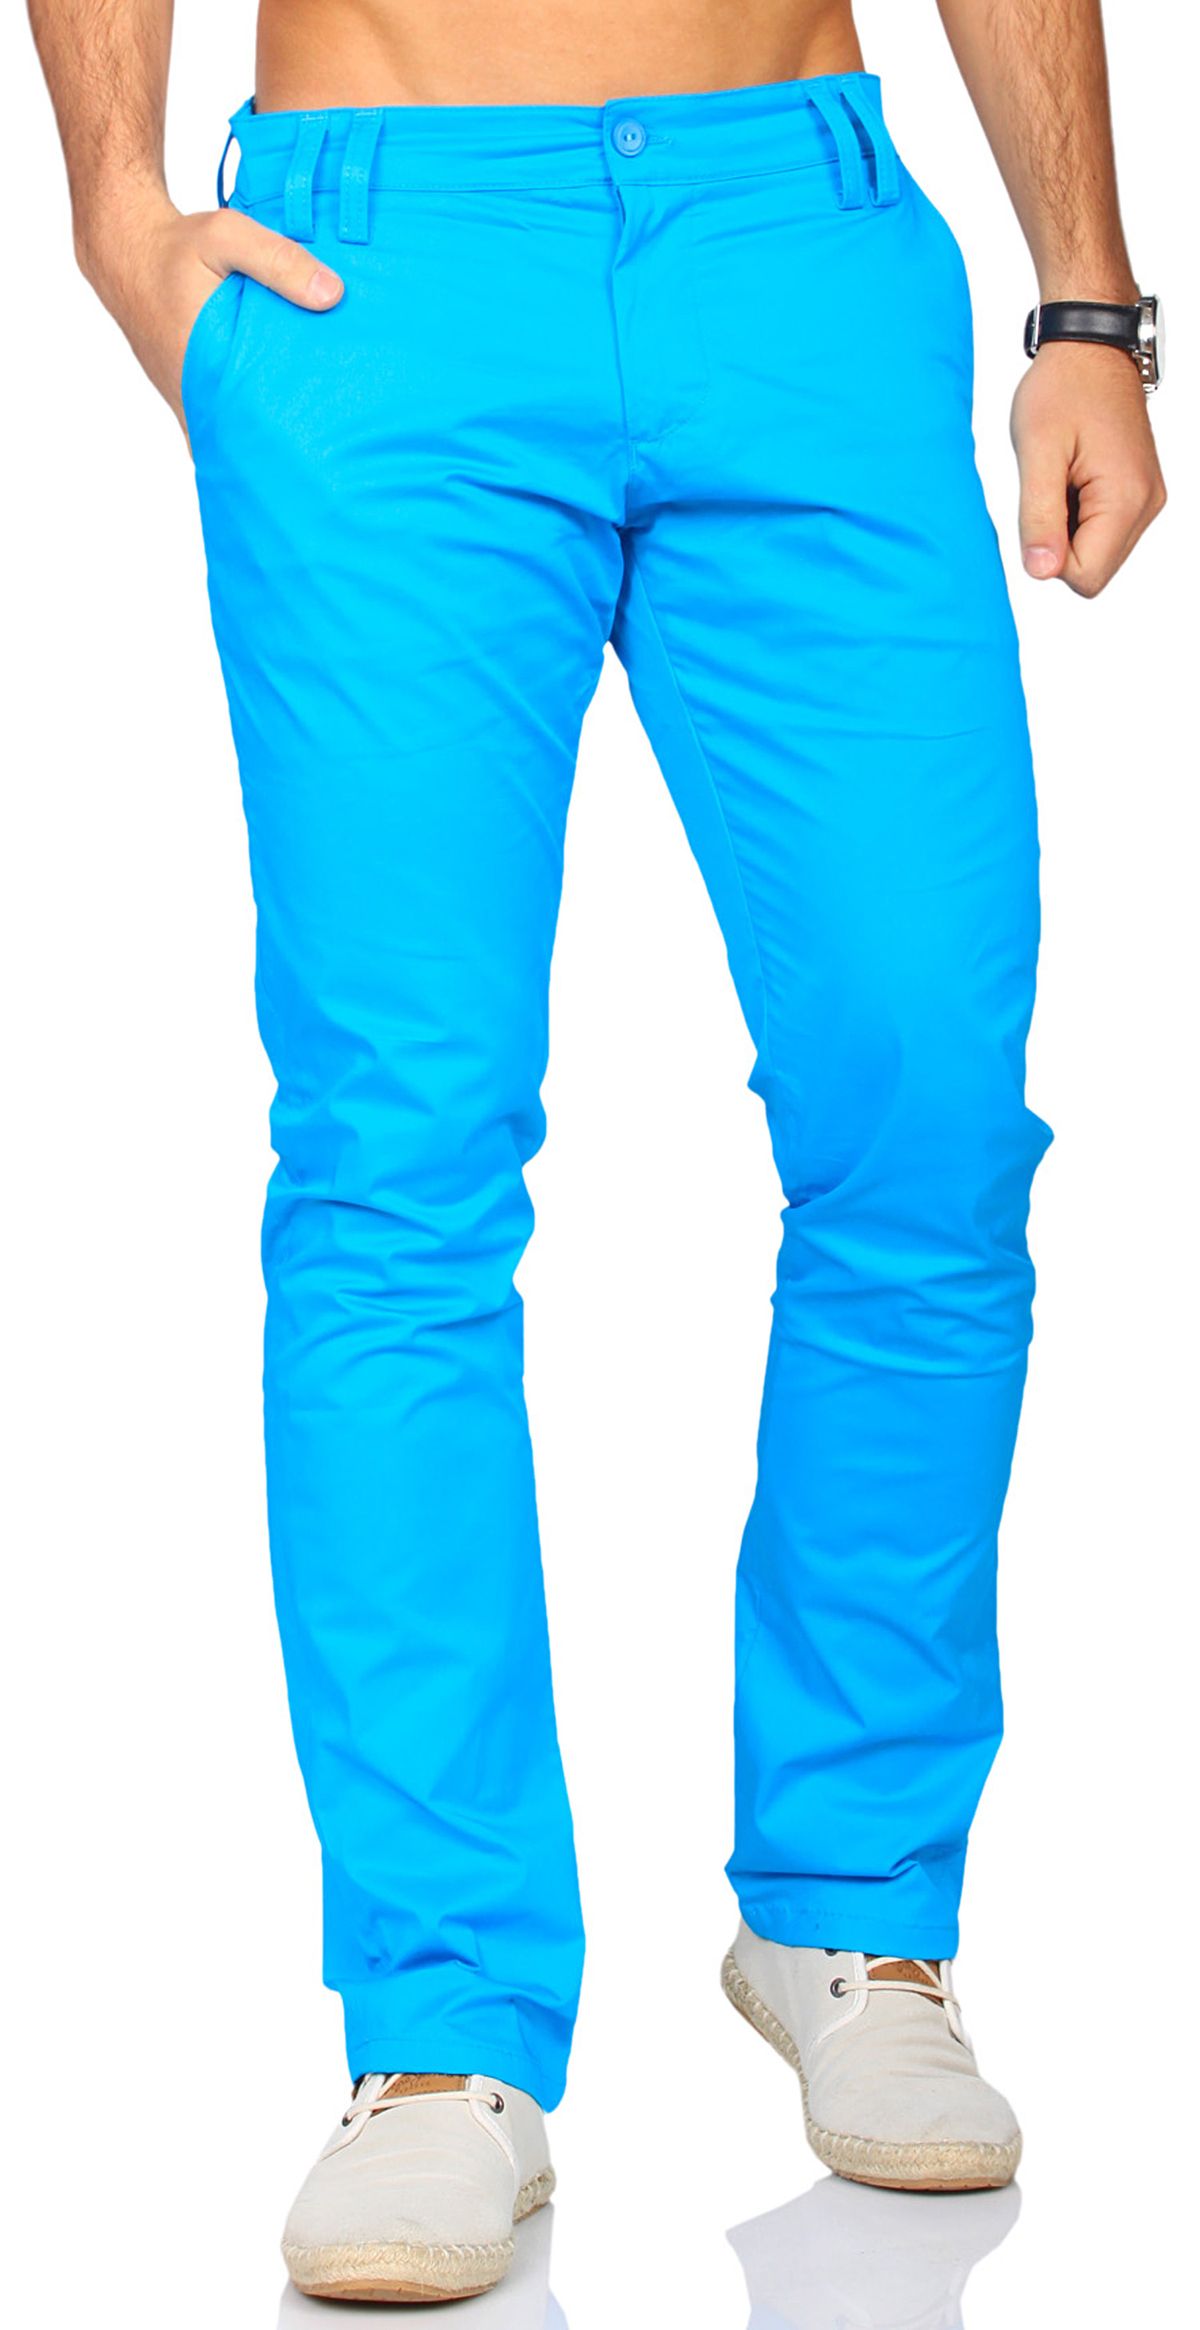 Fit blocking style color | Sommerhose Pants Slim Herren Hose stretch Rerock eBay Chino